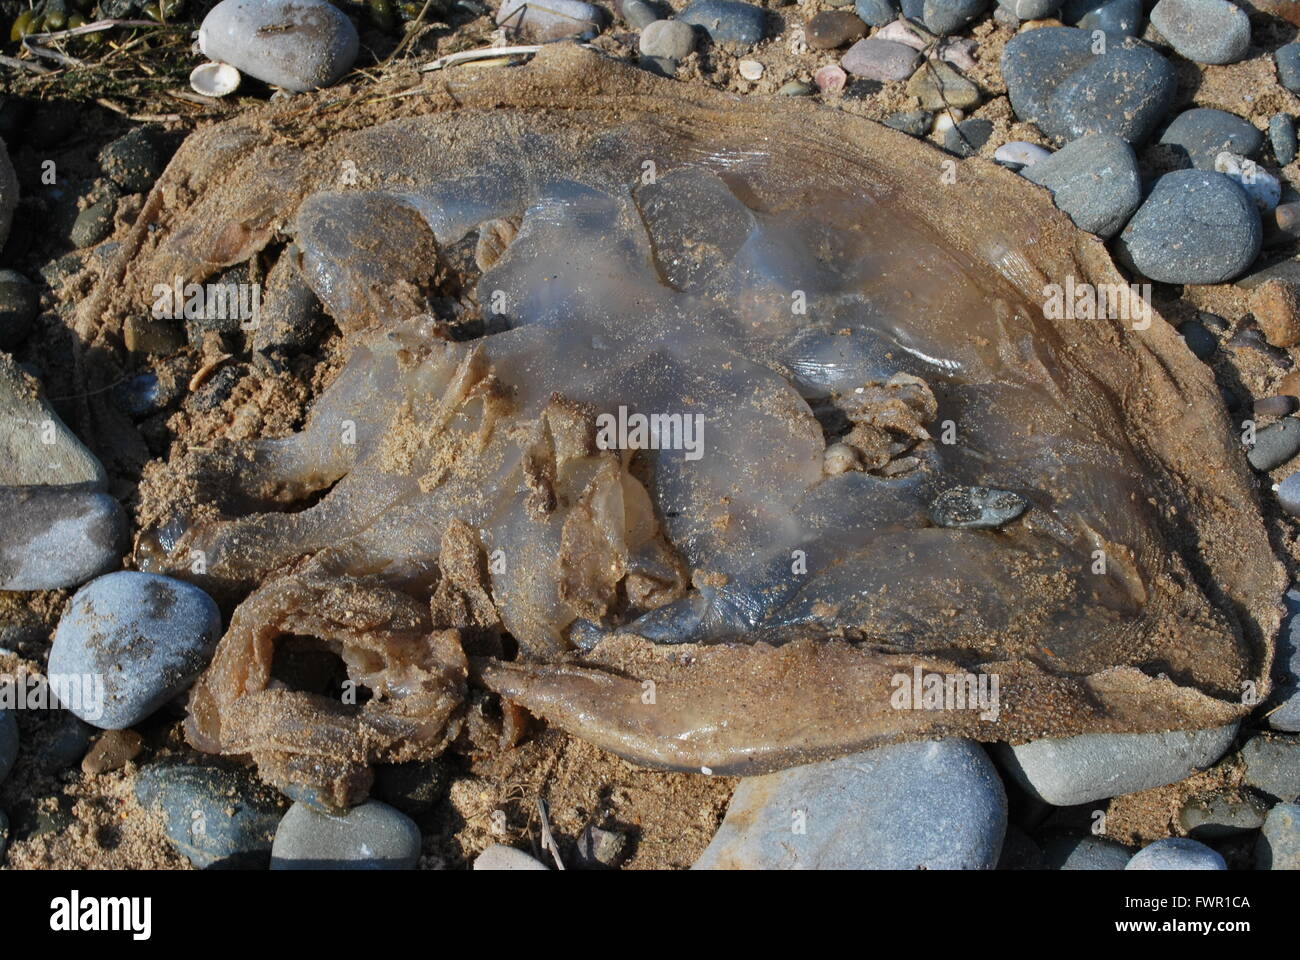 Barrel jellyfish washed up near Prestatyn,Wales Stock Photo